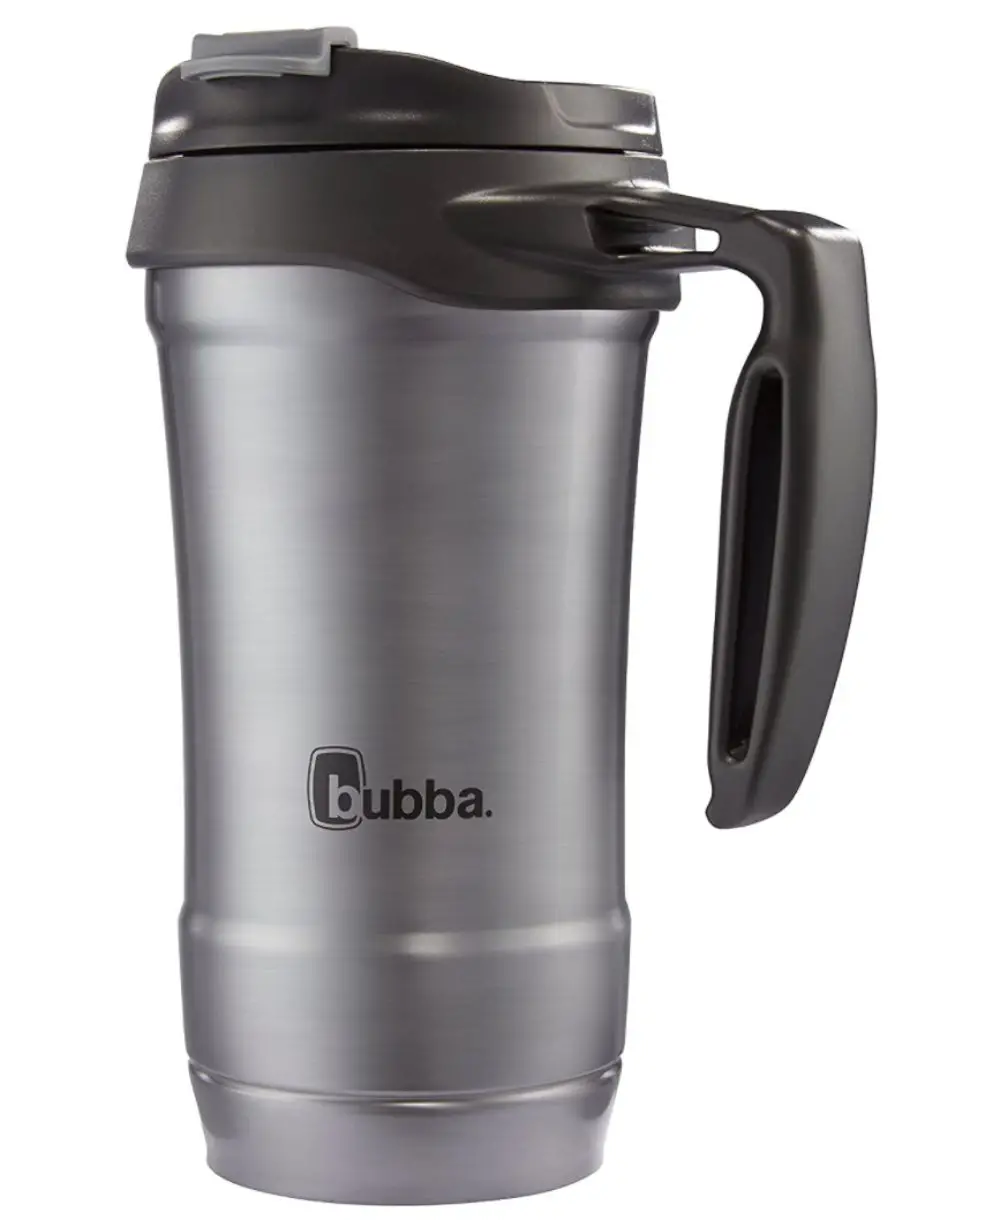 bubba travel mug 8 oz